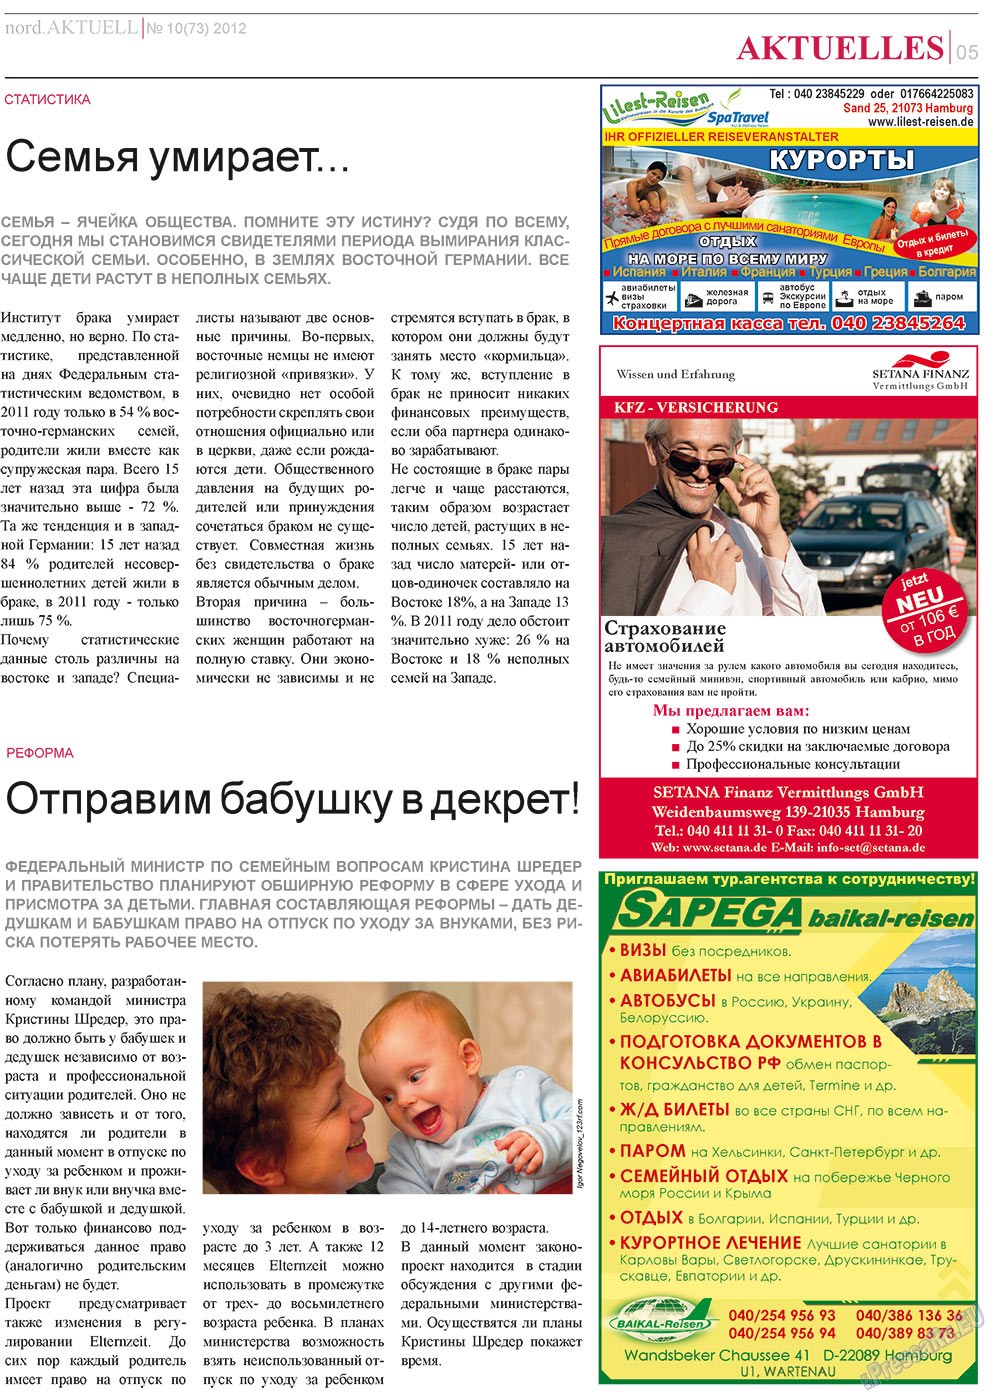 nord.Aktuell (газета). 2012 год, номер 10, стр. 5